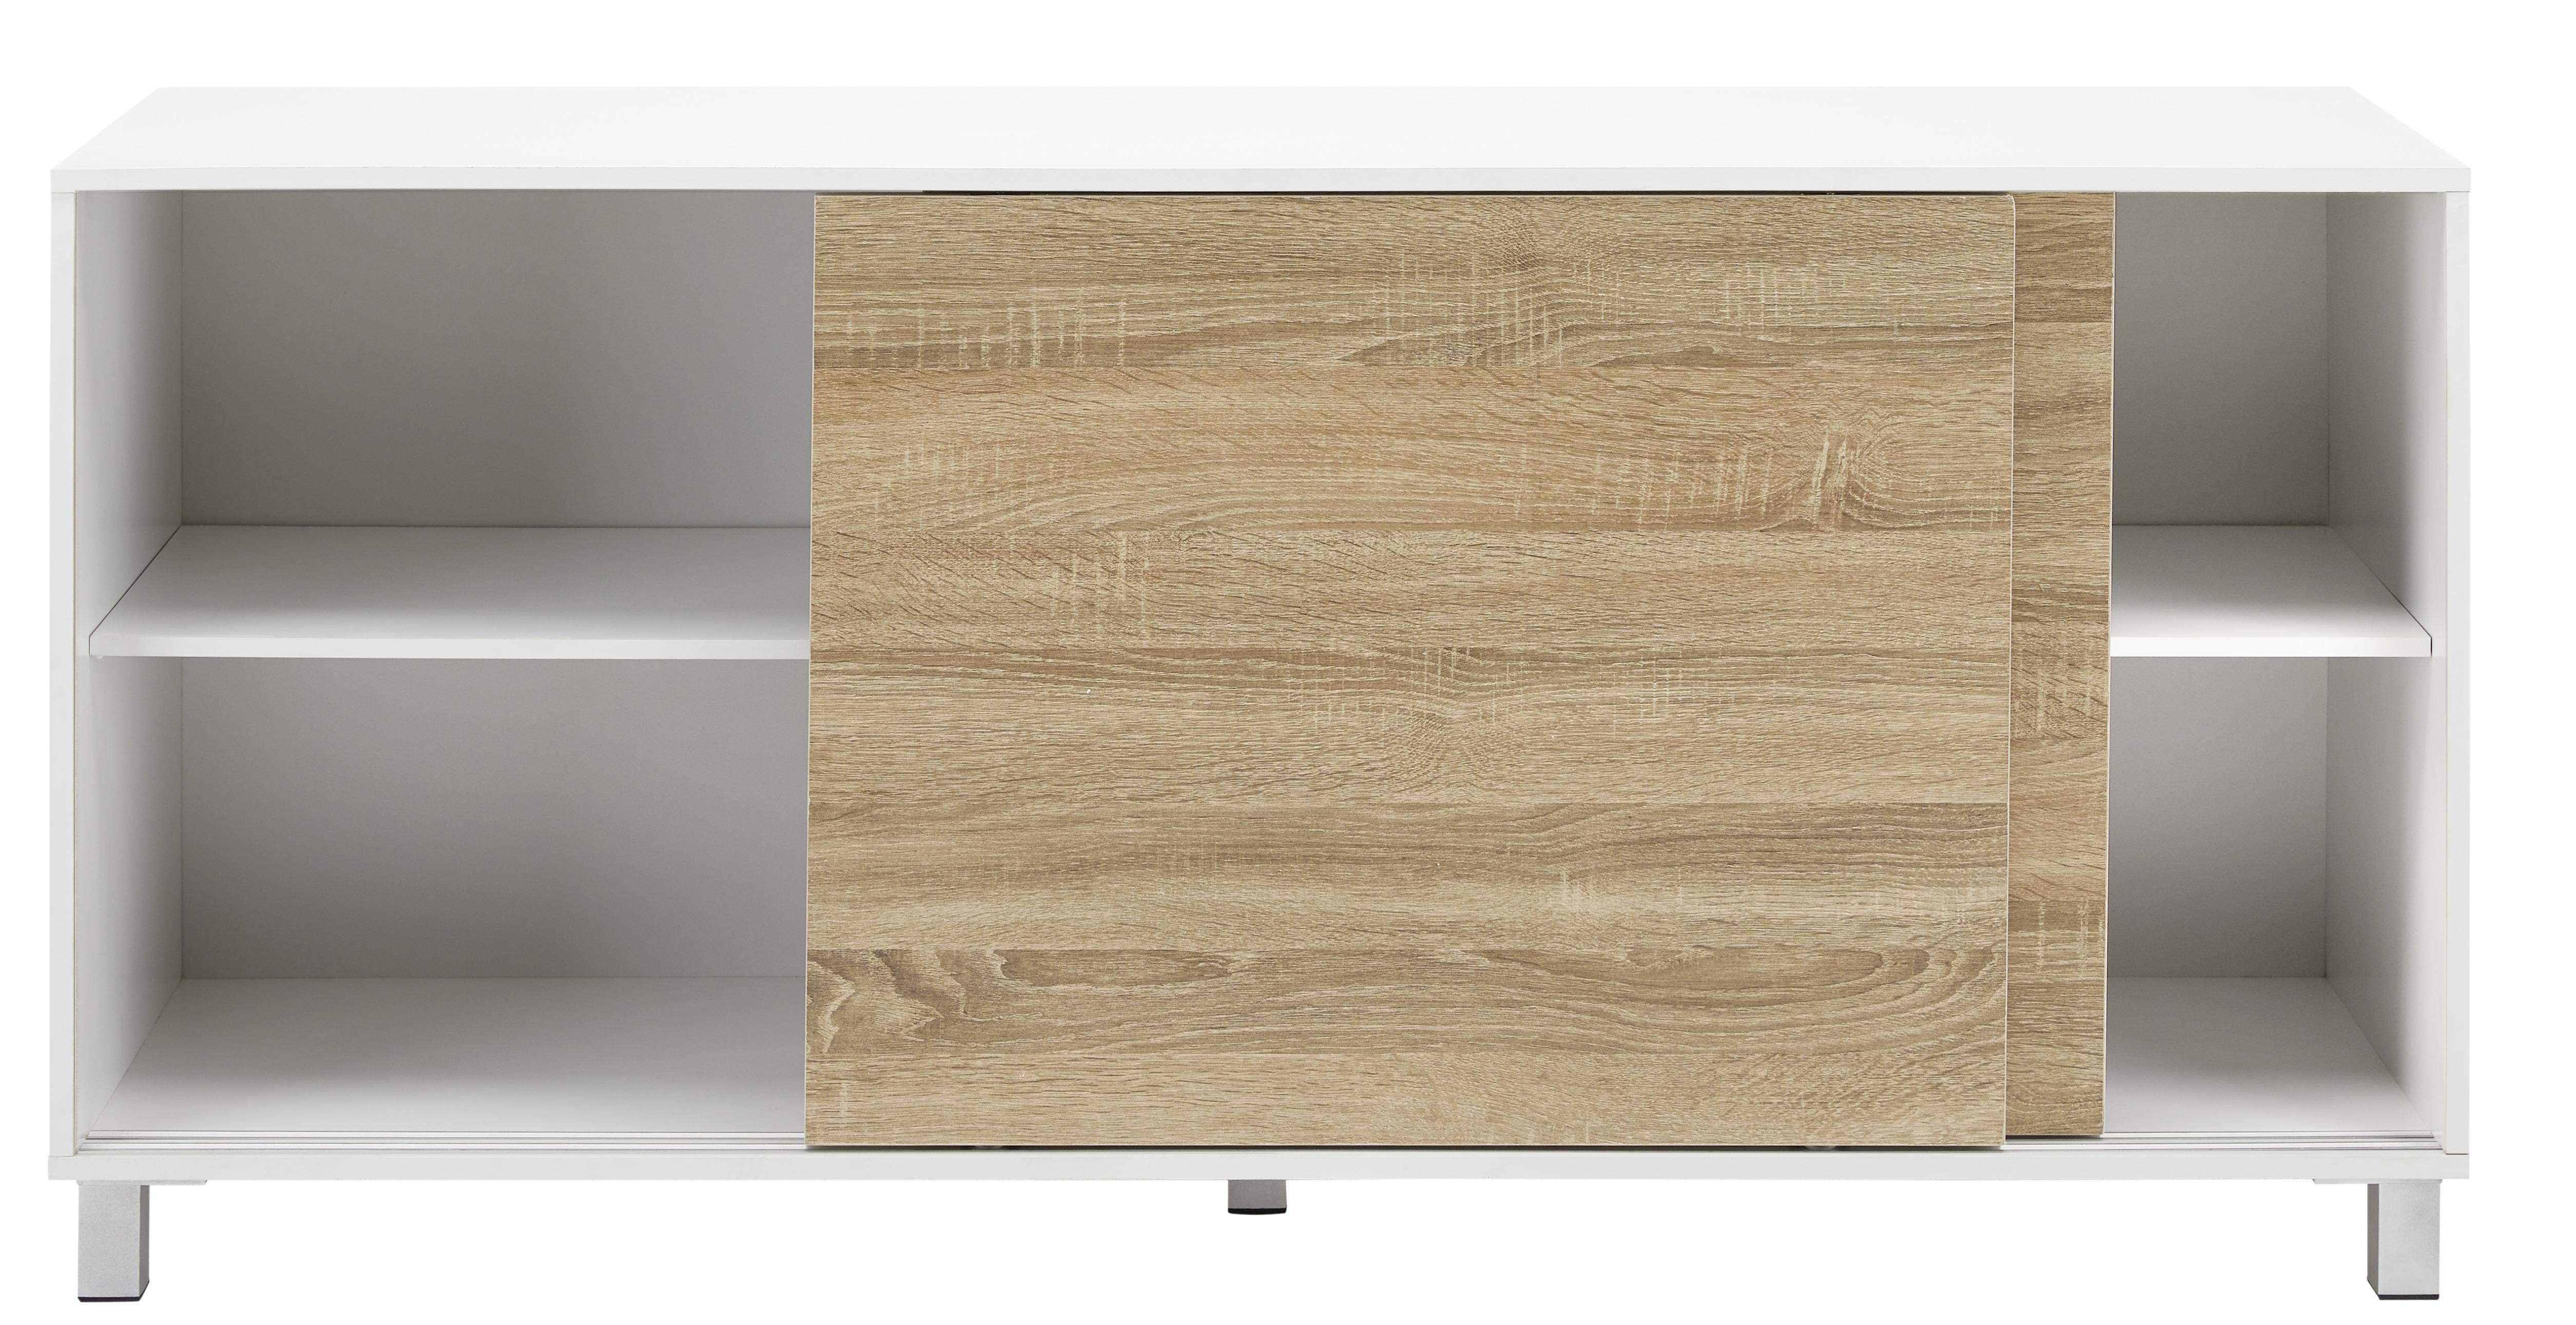 Komoda Tanja - bílá/barvy dubu, Moderní, dřevo/plast (146/70/40cm) - Modern Living